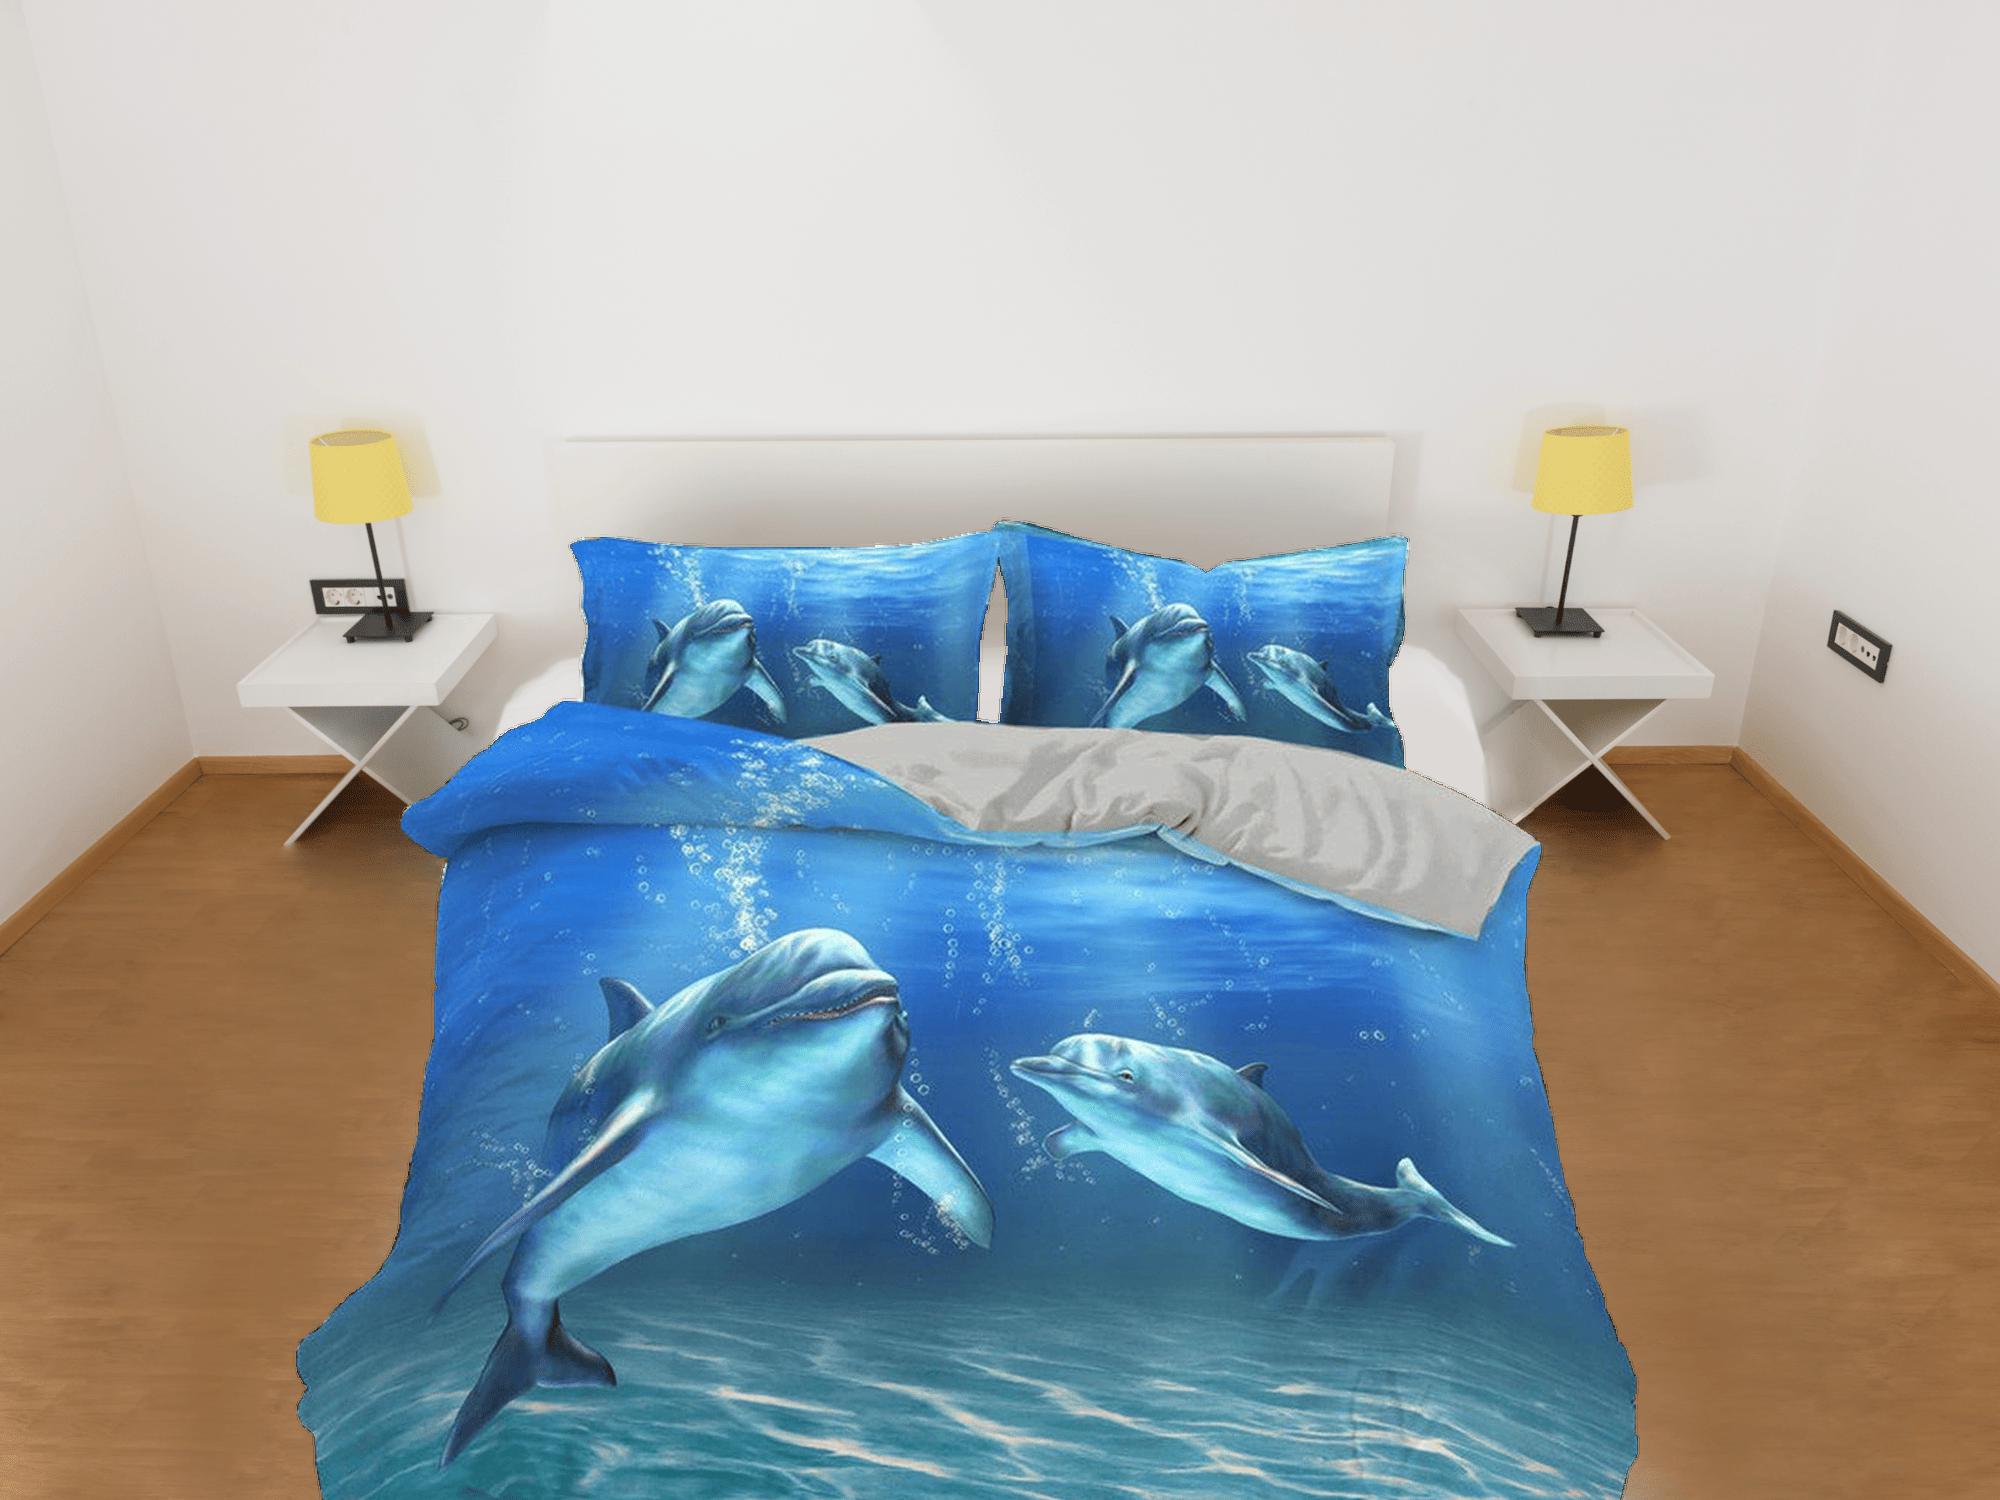 daintyduvet Cute dolphins under the sea bedding blue duvet cover, ocean blush decor bottle nose dolphin bedding set full king queen twin, dorm bedding